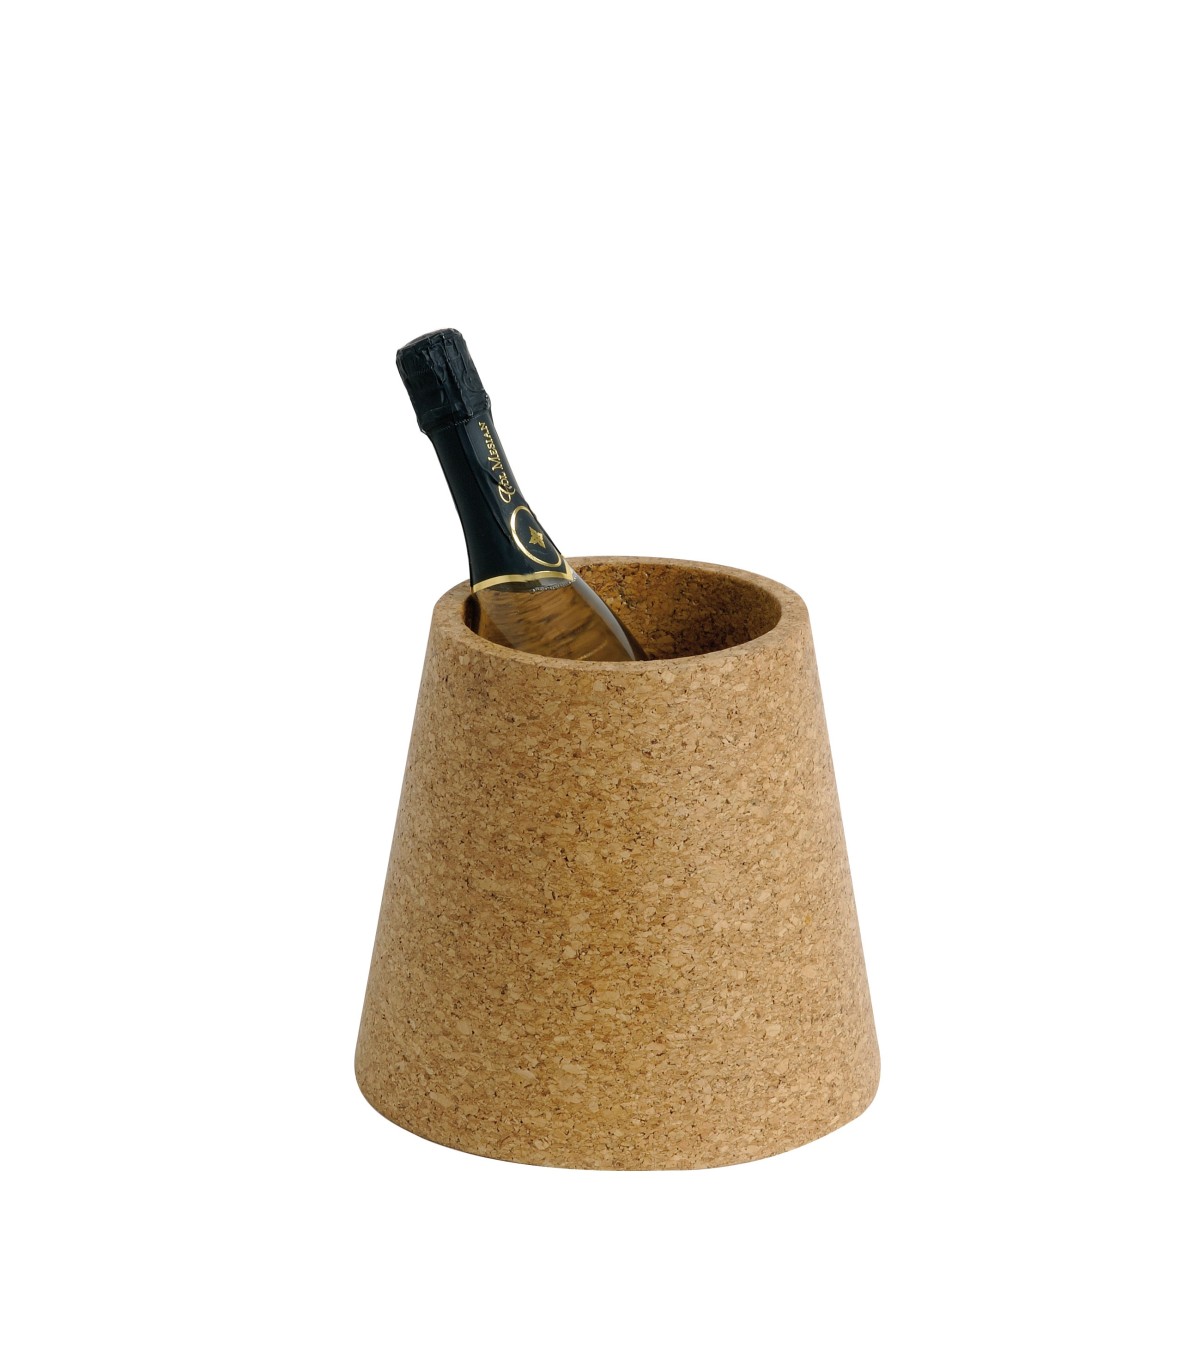 Bucket Flare in the cork/bottle holder